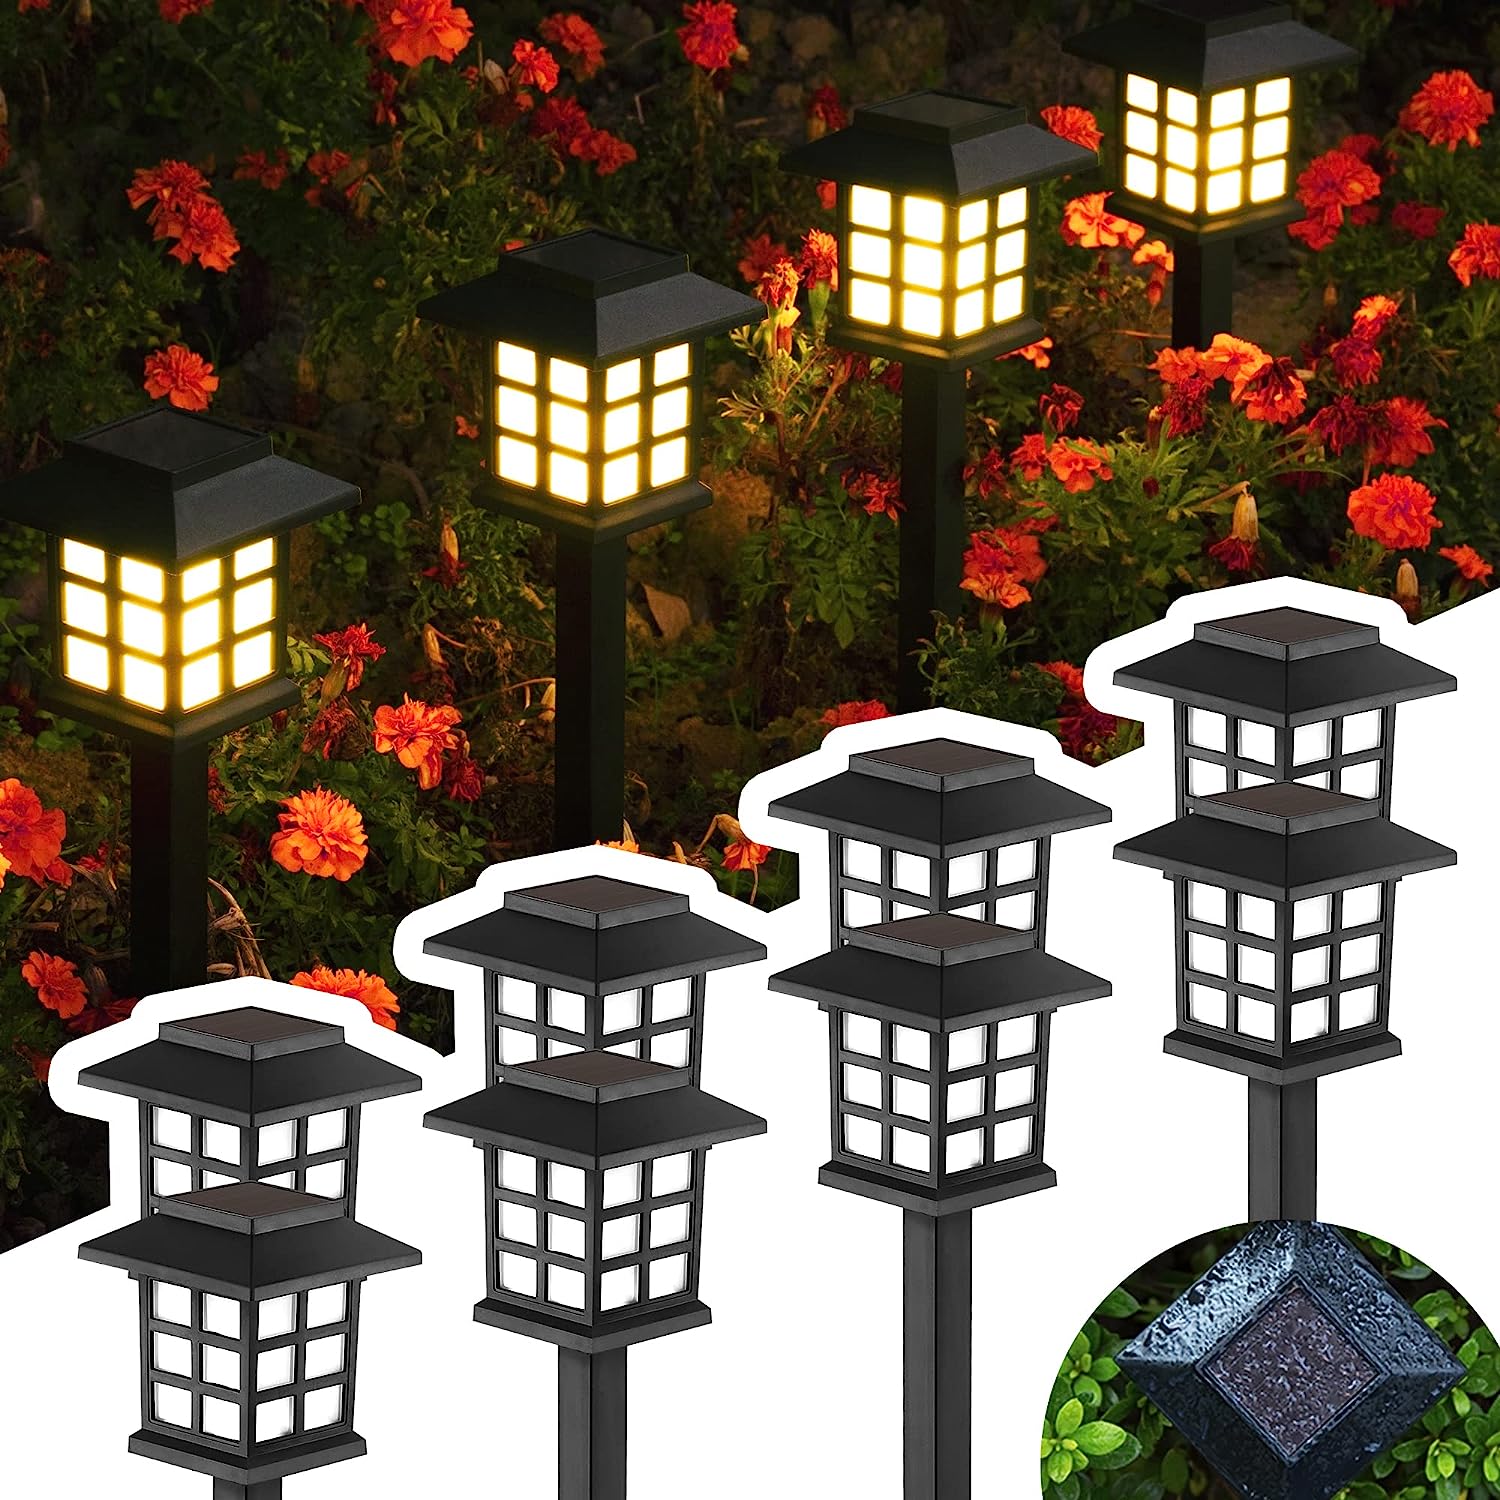 Generic - Lanterne Solaire, Lampes Solaires Jardin Lampe Solaire